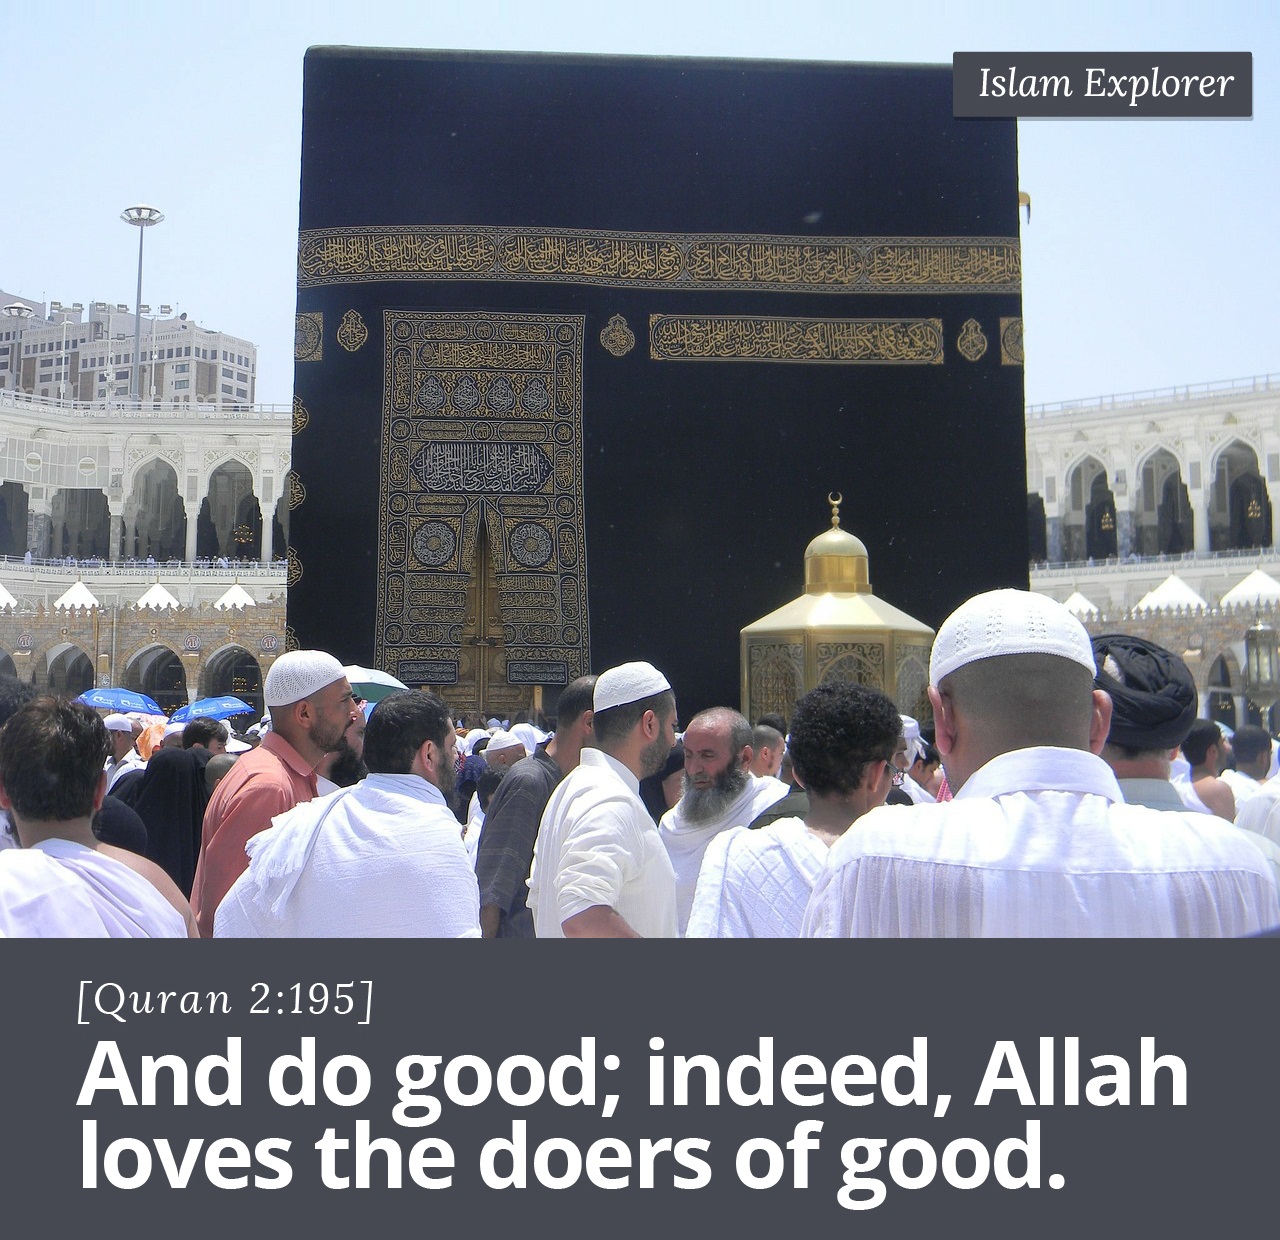 Allah loves the doers of good.